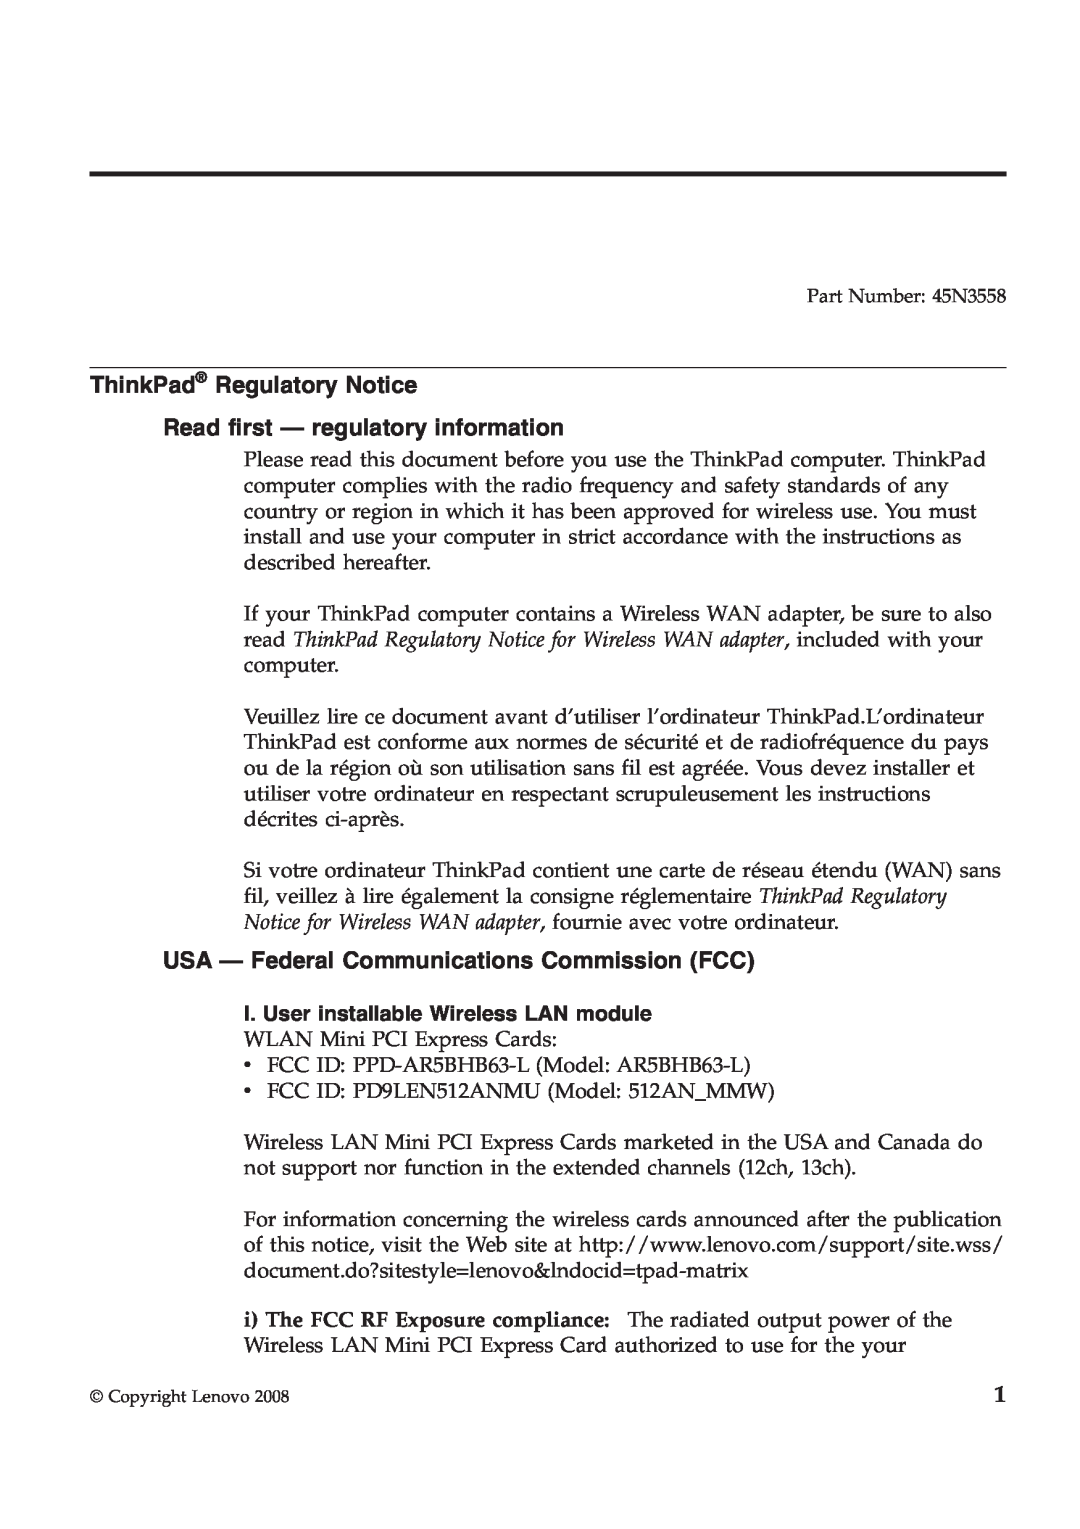 Lenovo 45N3558 manual ThinkPad Regulatory Notice, Read first - regulatory information 